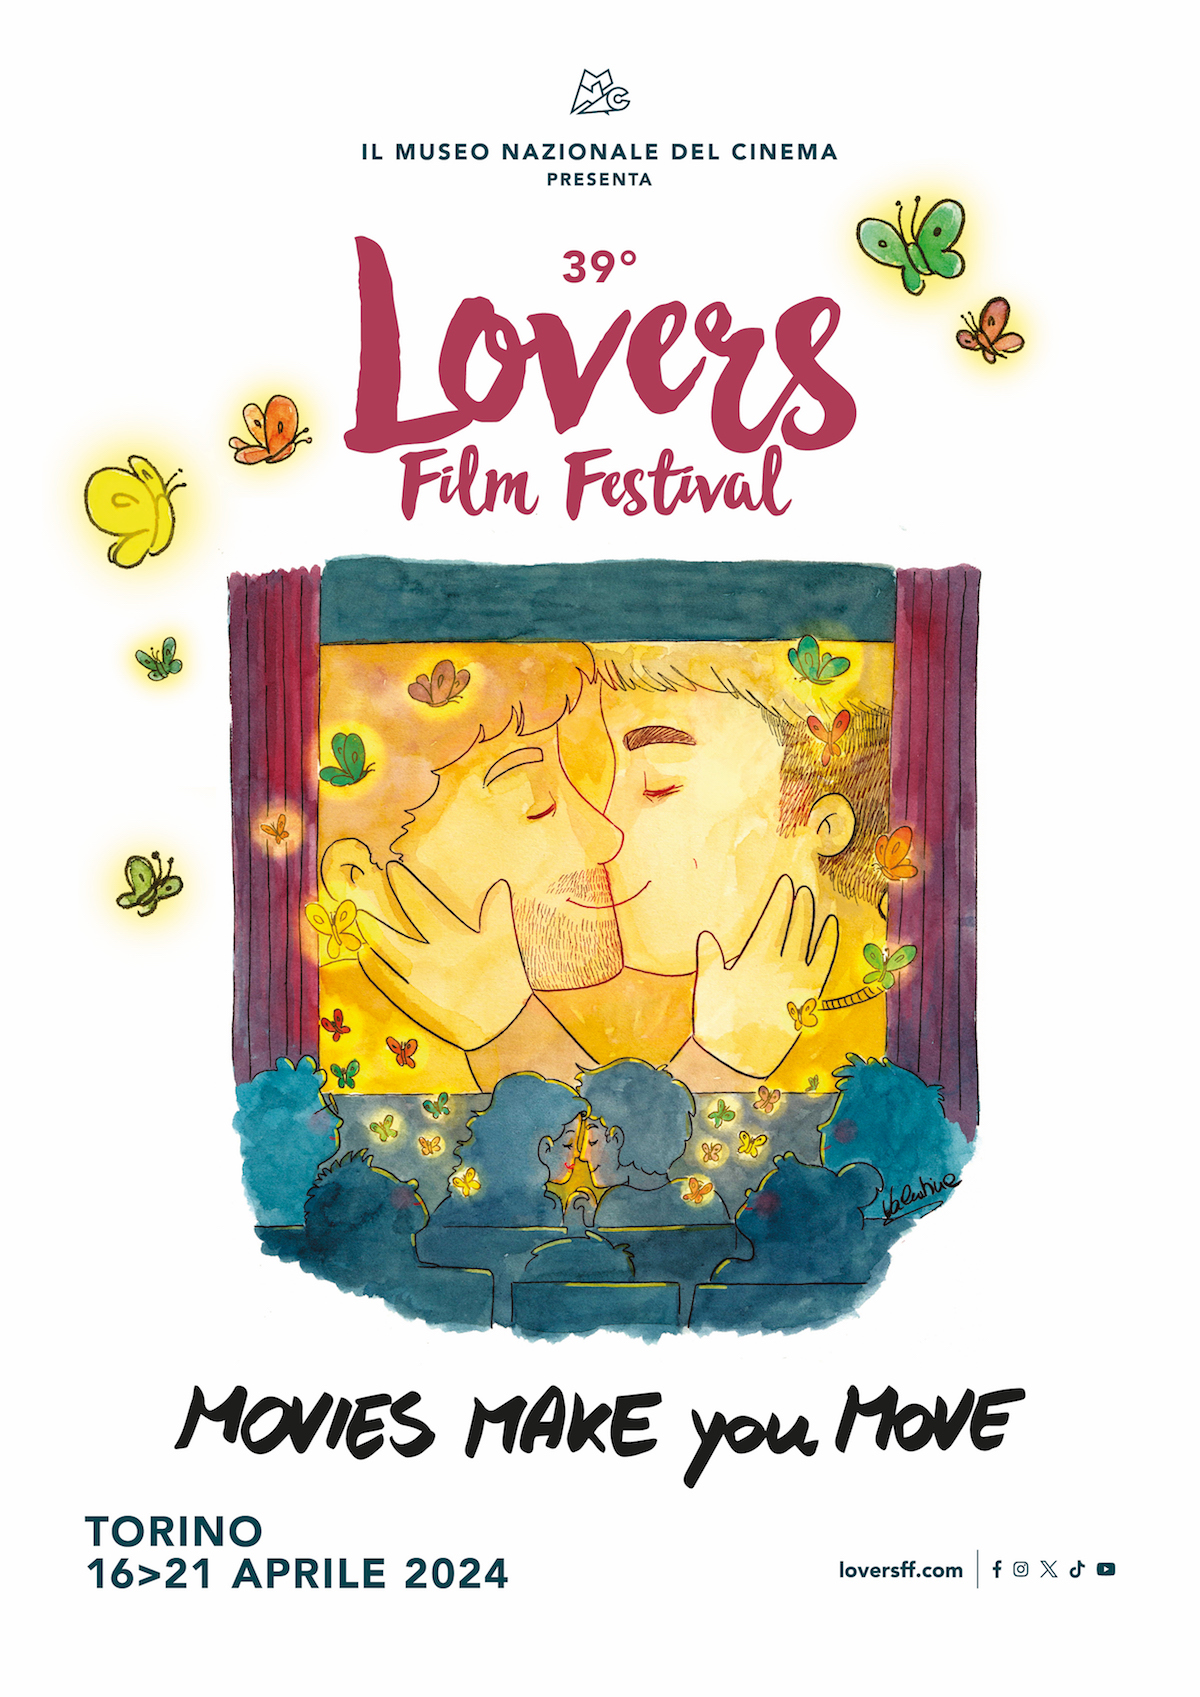 Locandina Lovers Film Festival, illustrata da Valentina Stecchi.